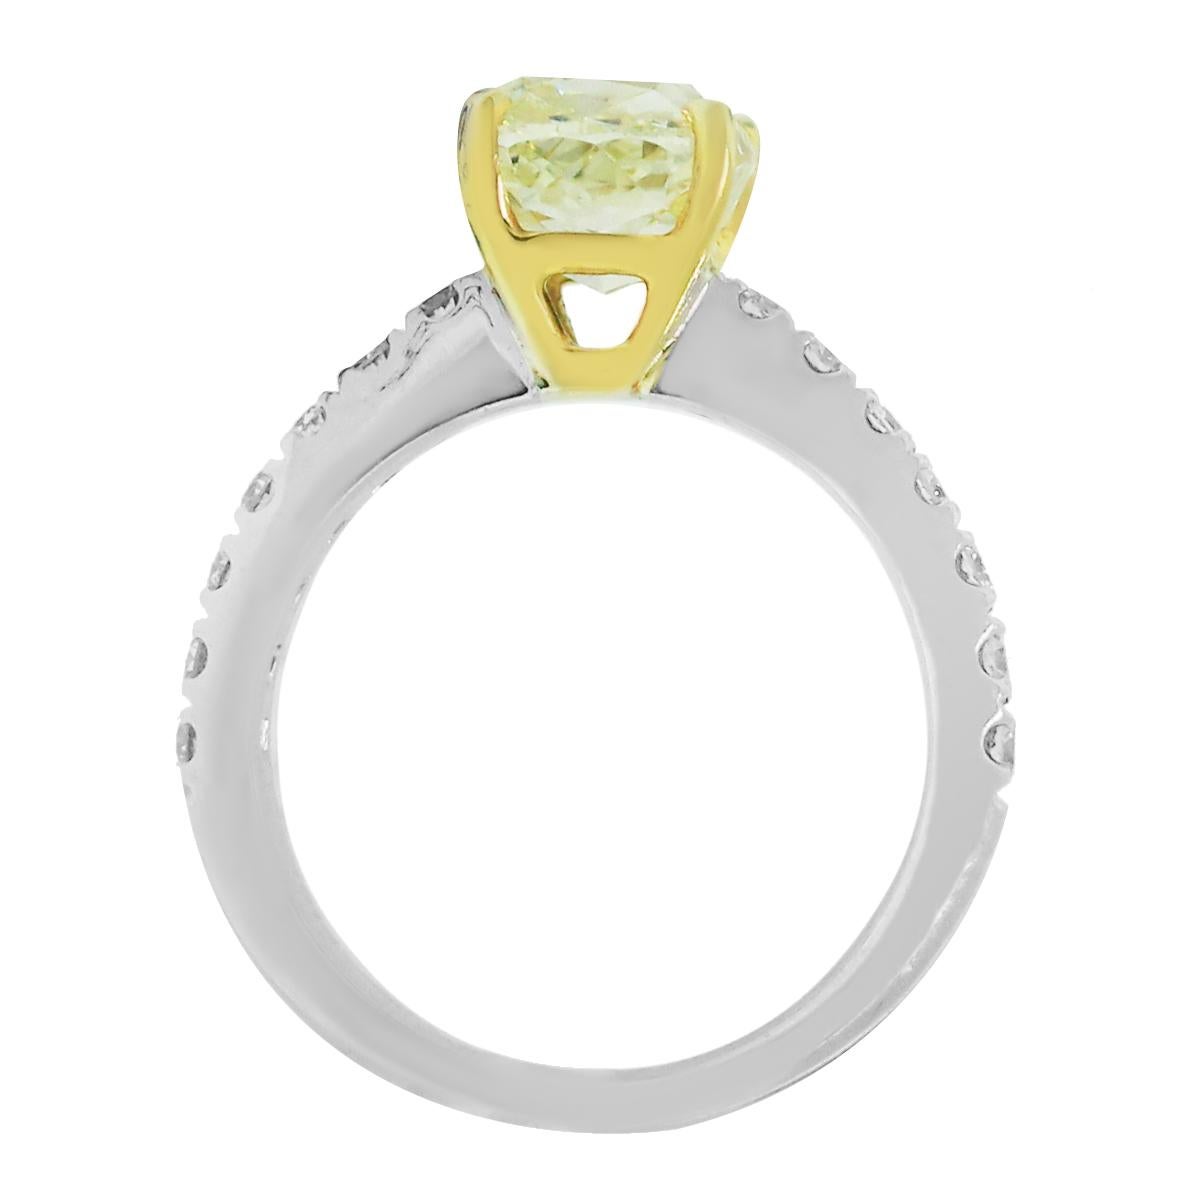 Cushion Cut 2.01 Carat Fancy Yellow Diamond Engagement Ring